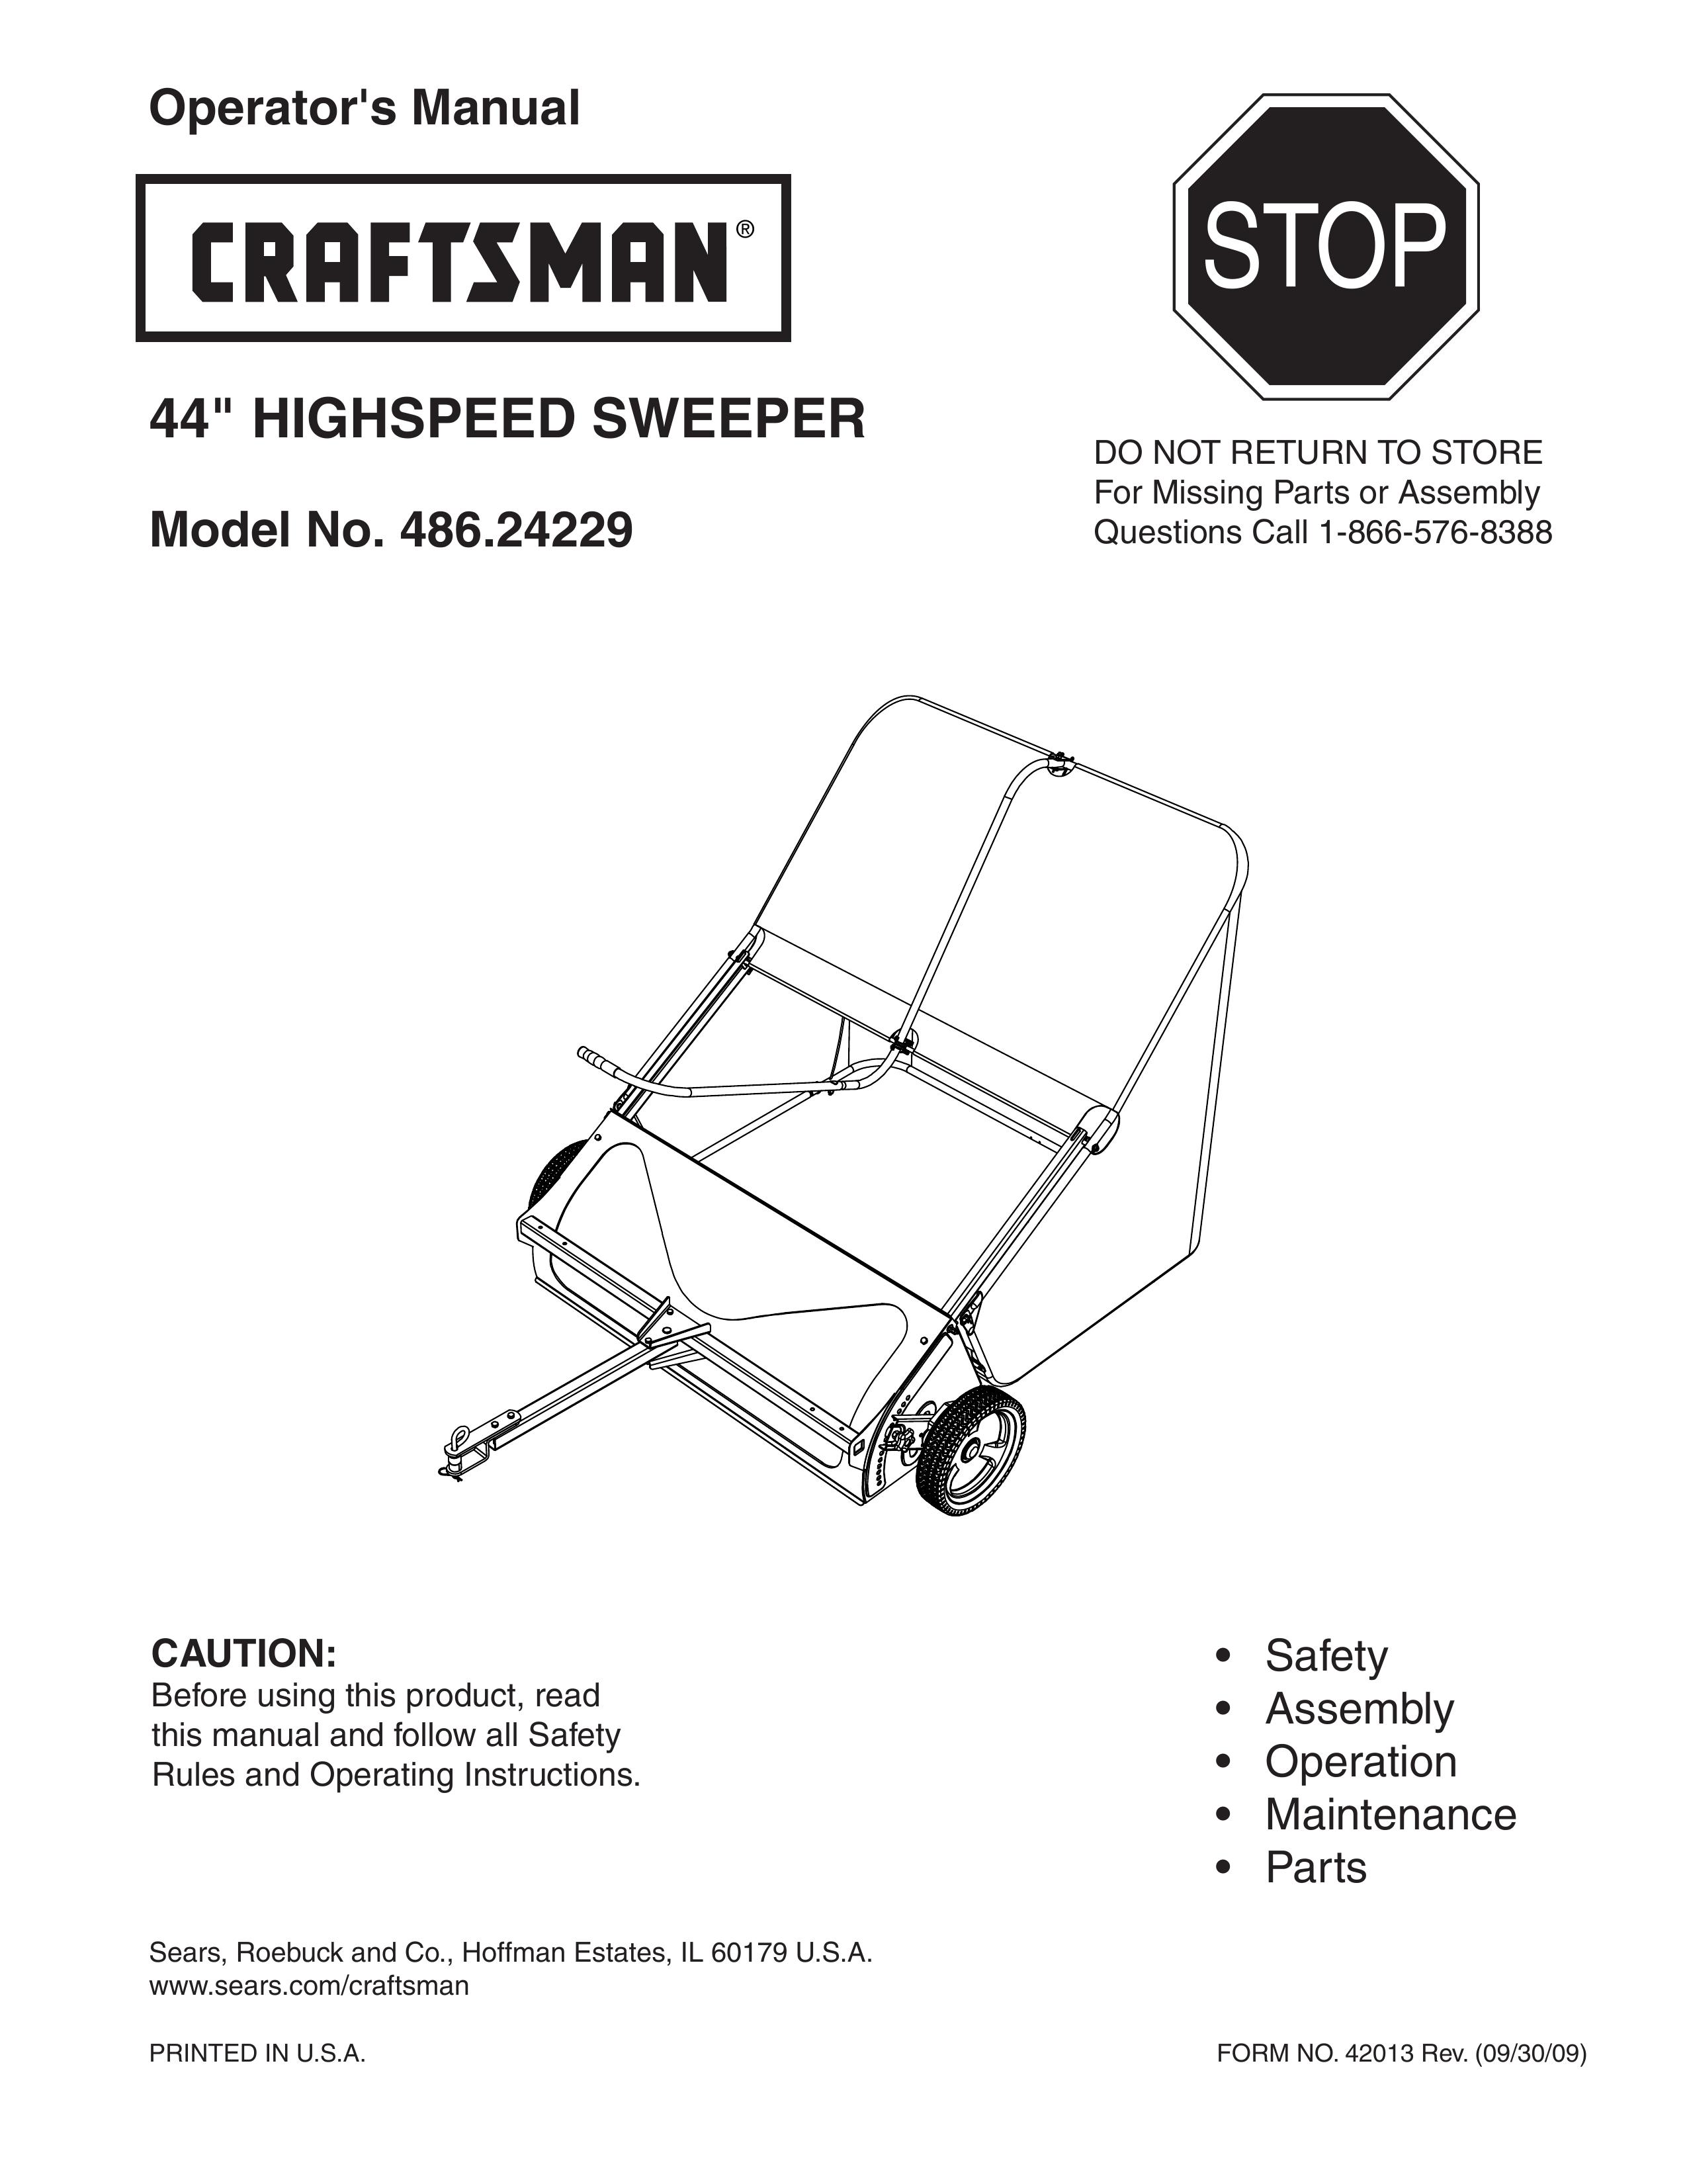 Craftsman 486.24229 Lawn Sweeper User Manual